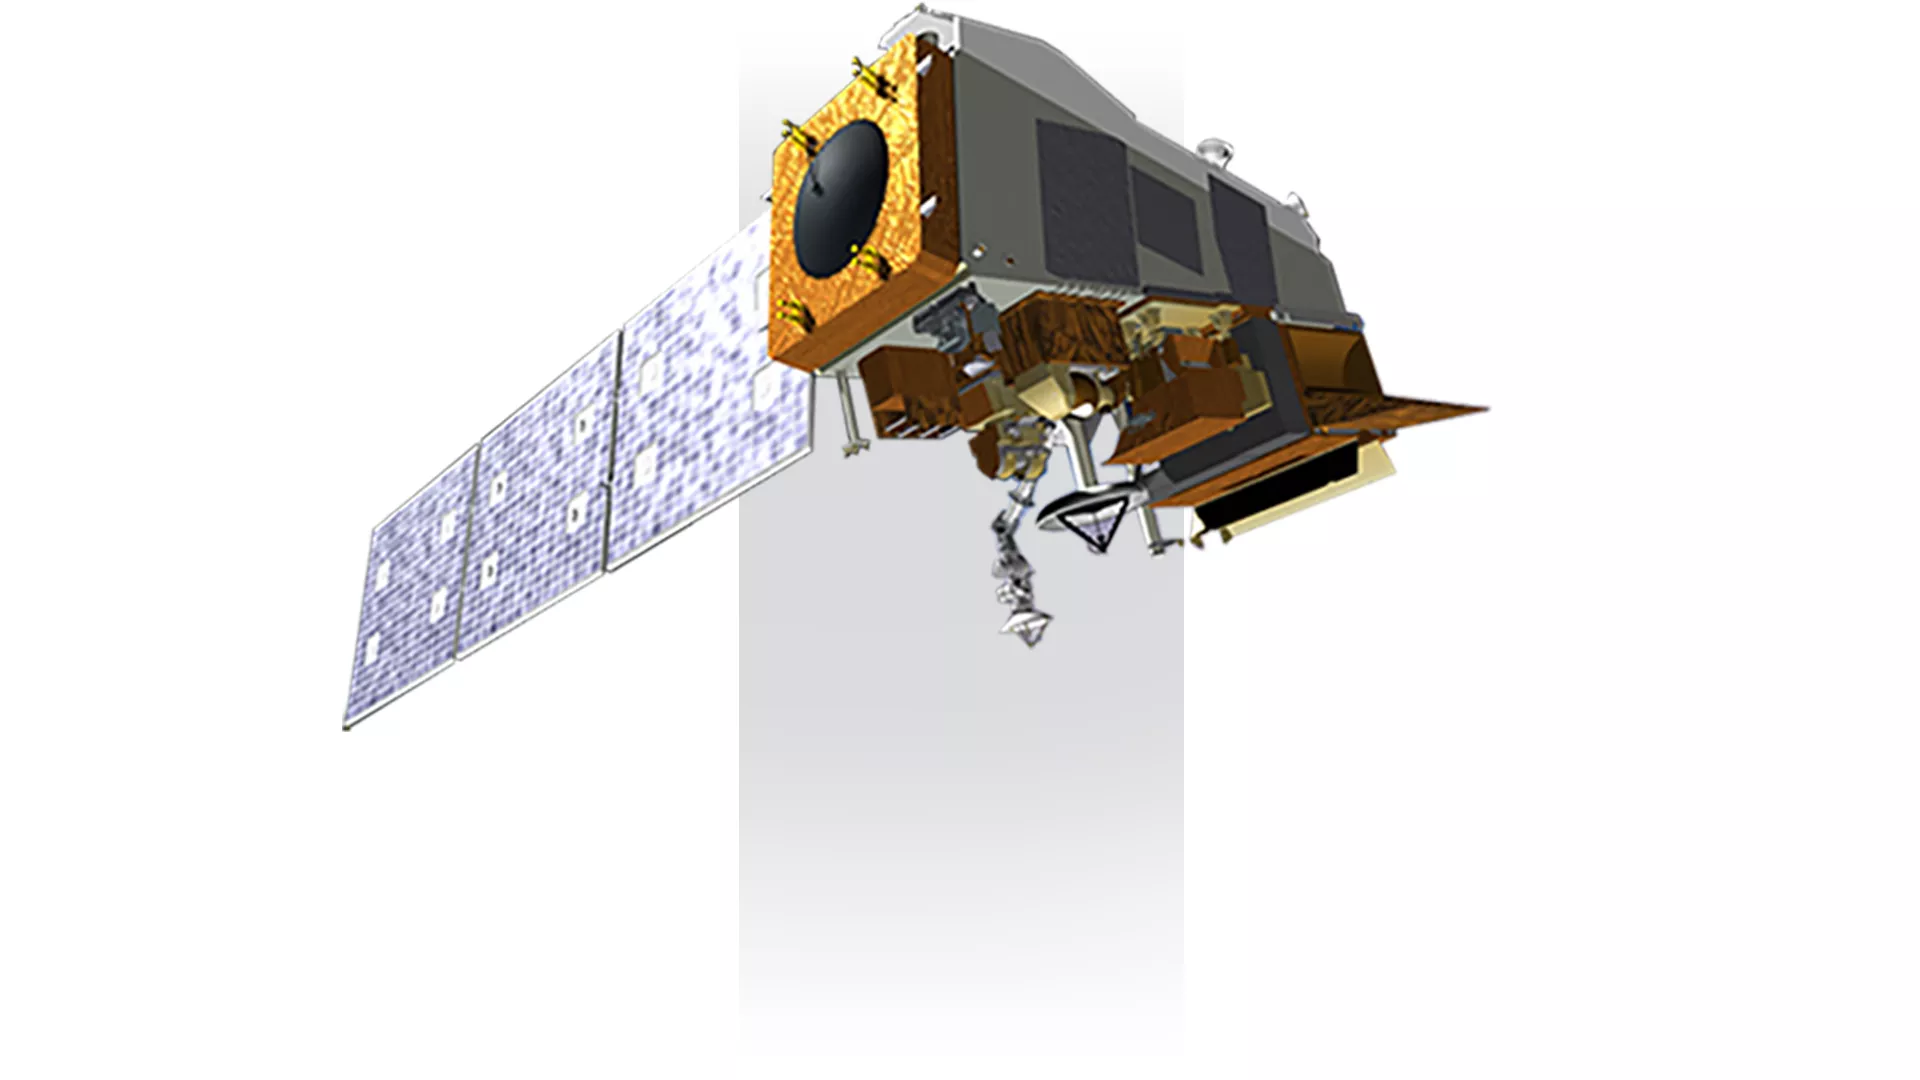 JPSS satellite